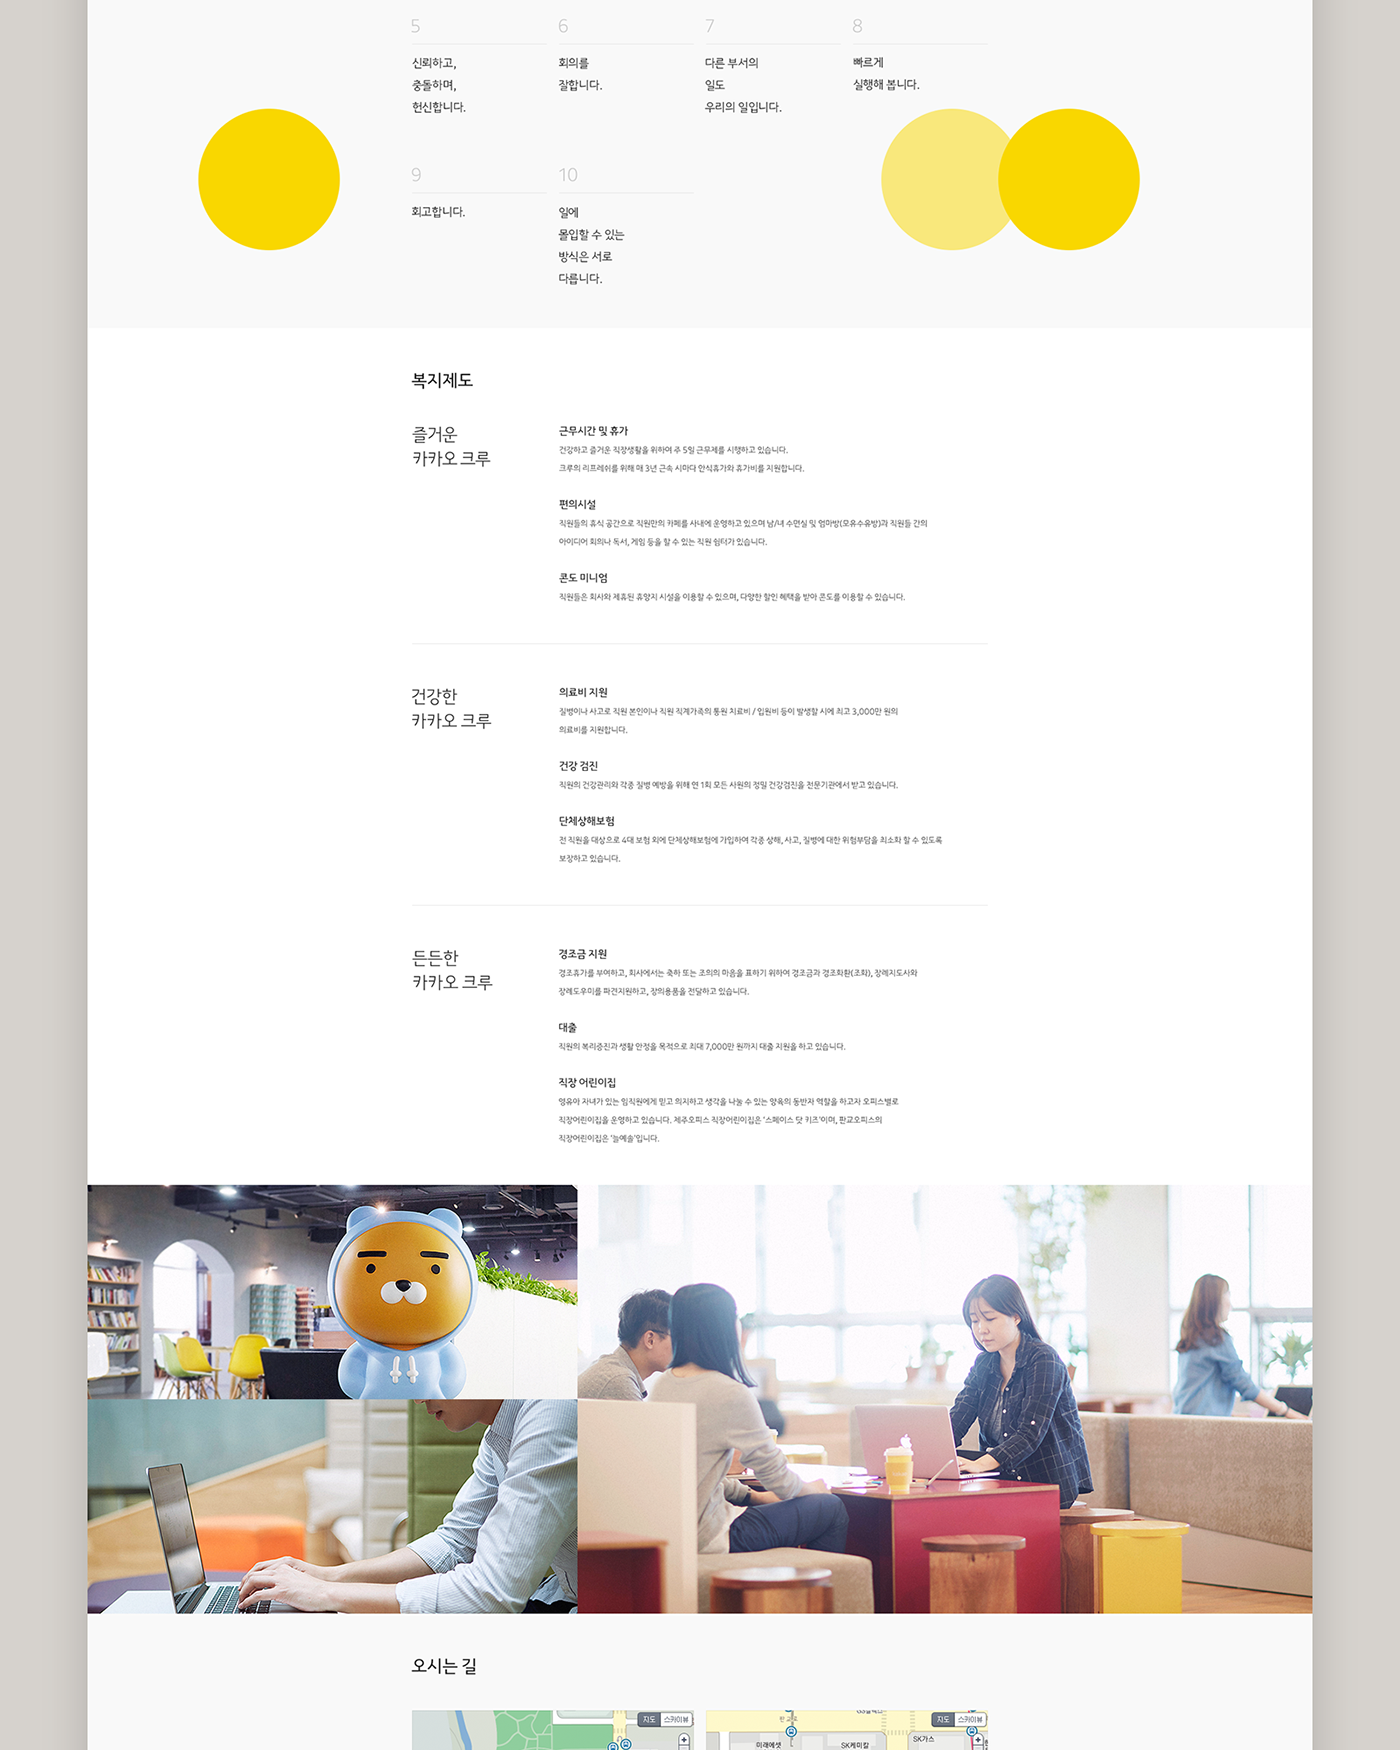 Kakao recruit Careers Website Web Design  카카오 영입사이트 UI 웹디자인